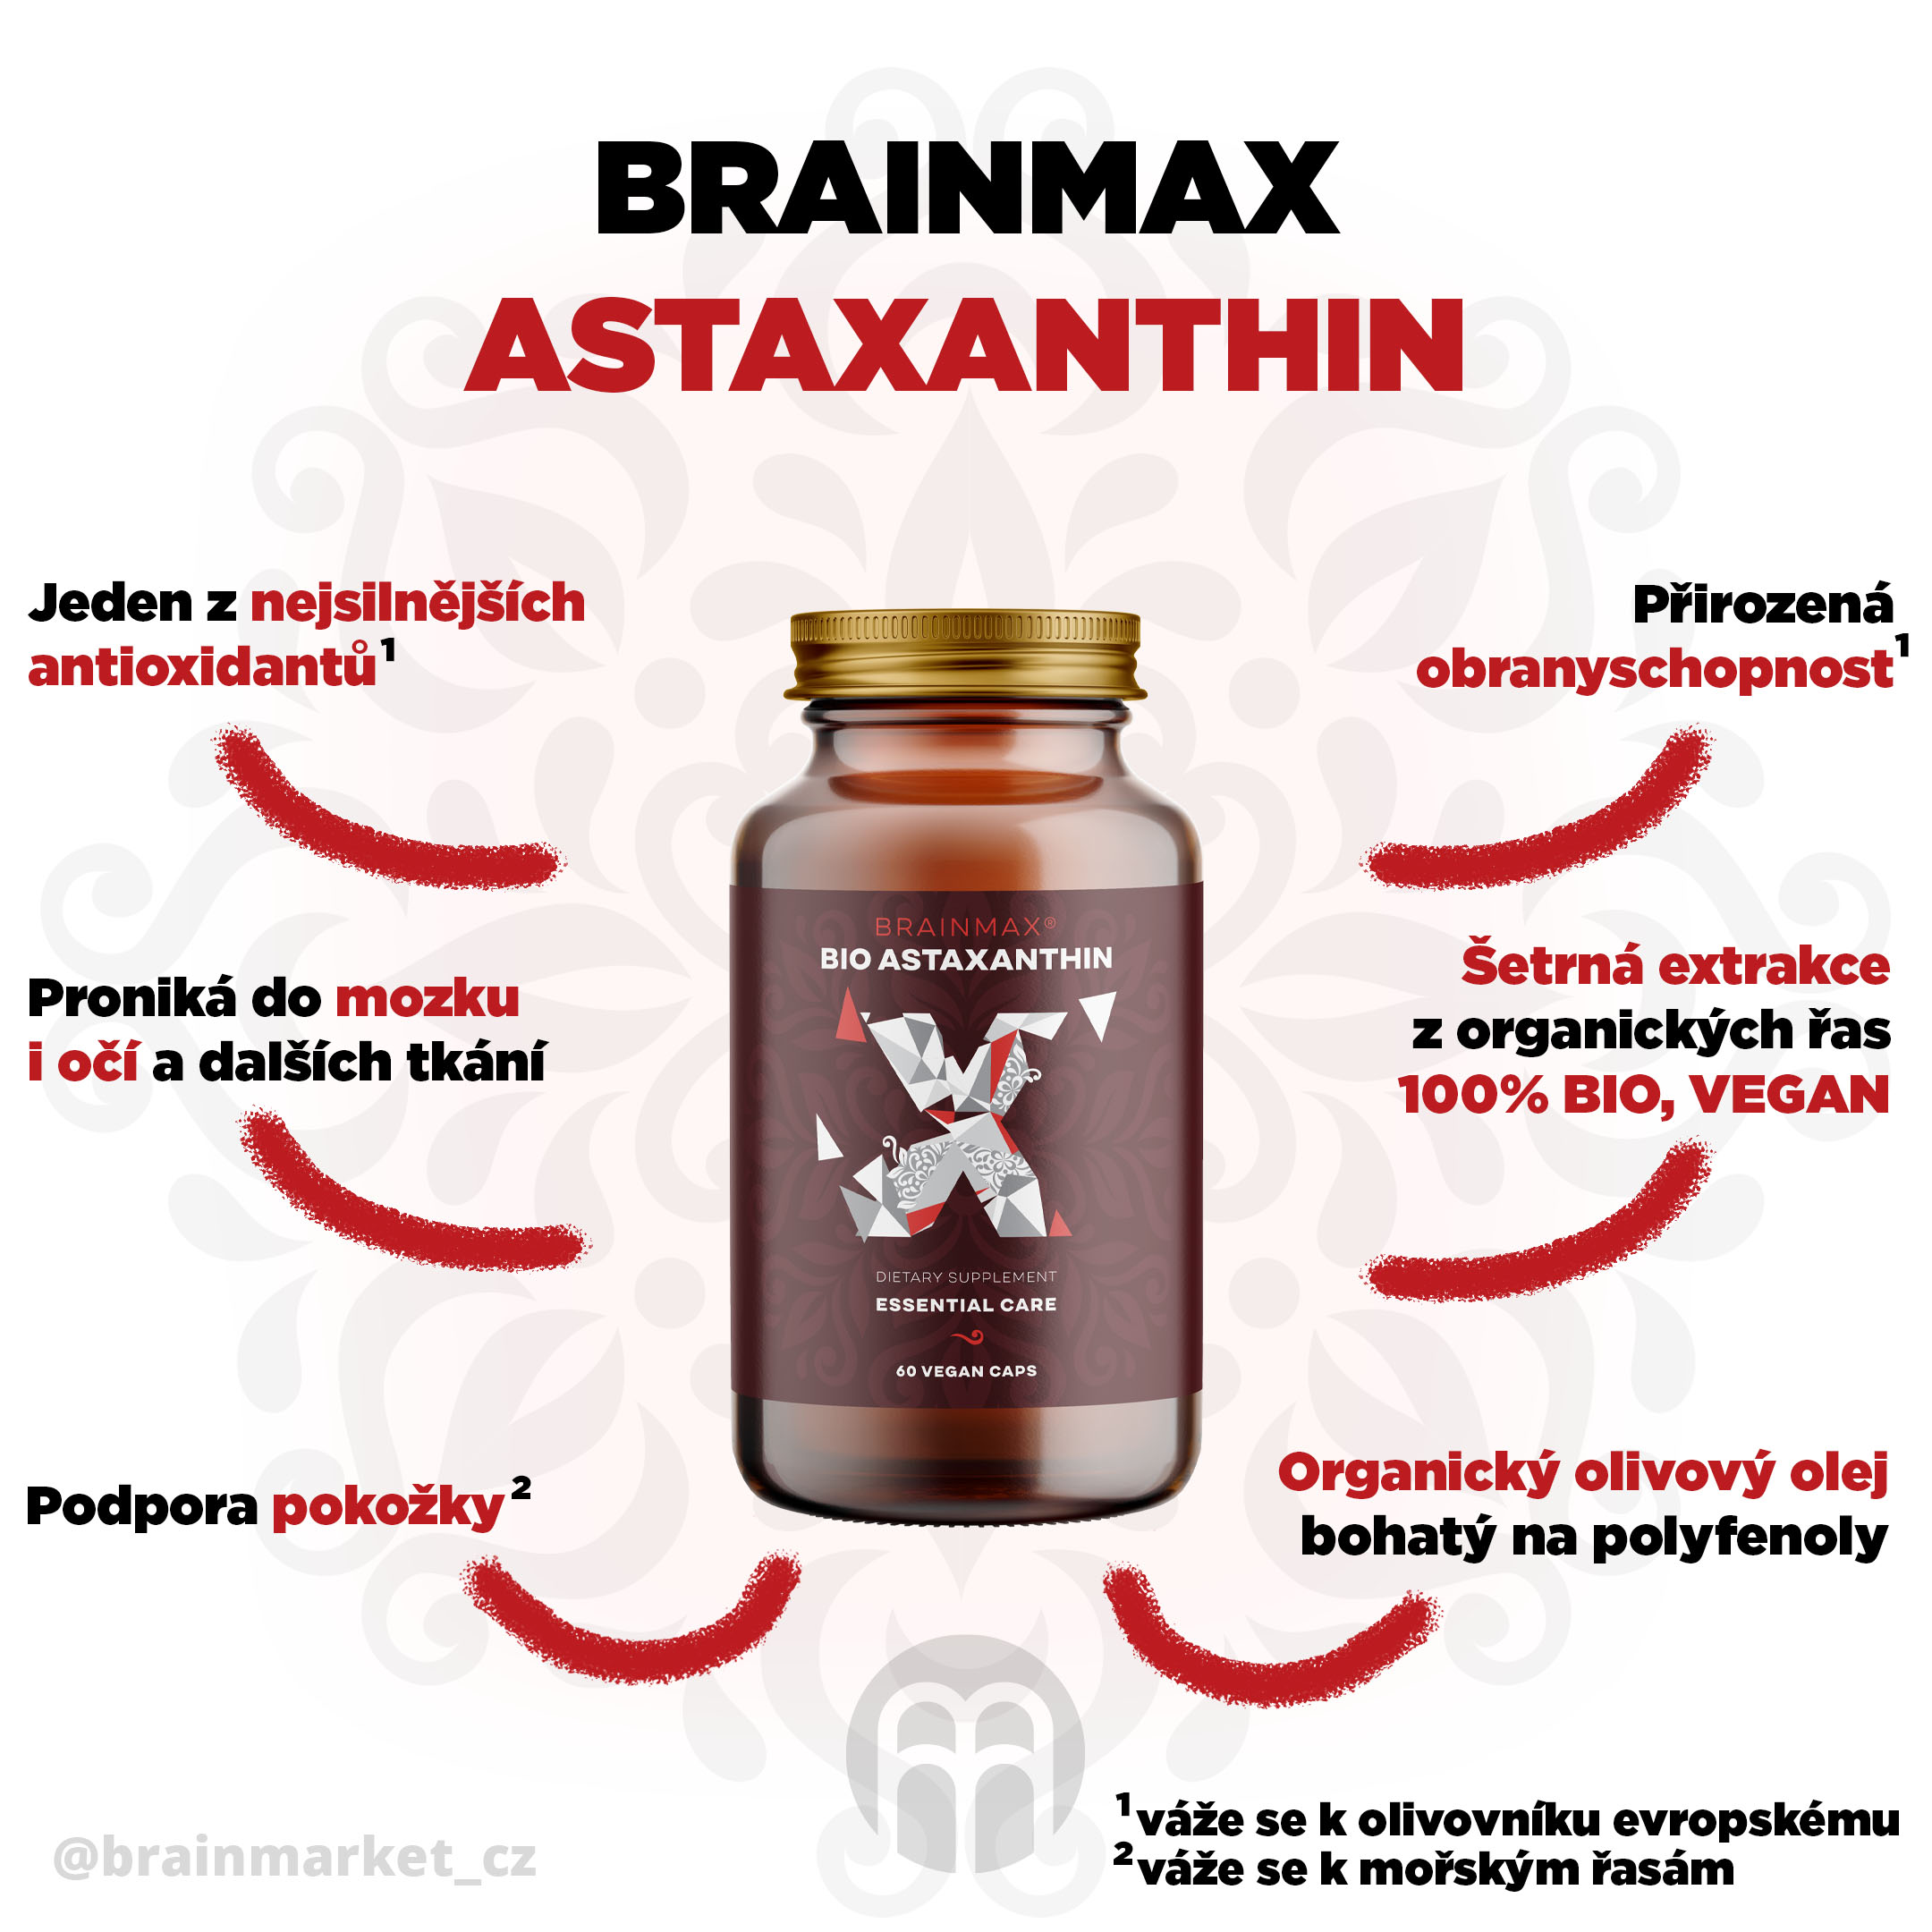 brainmax pure astaxanthin infografika (doztracena) brainmarket CZ